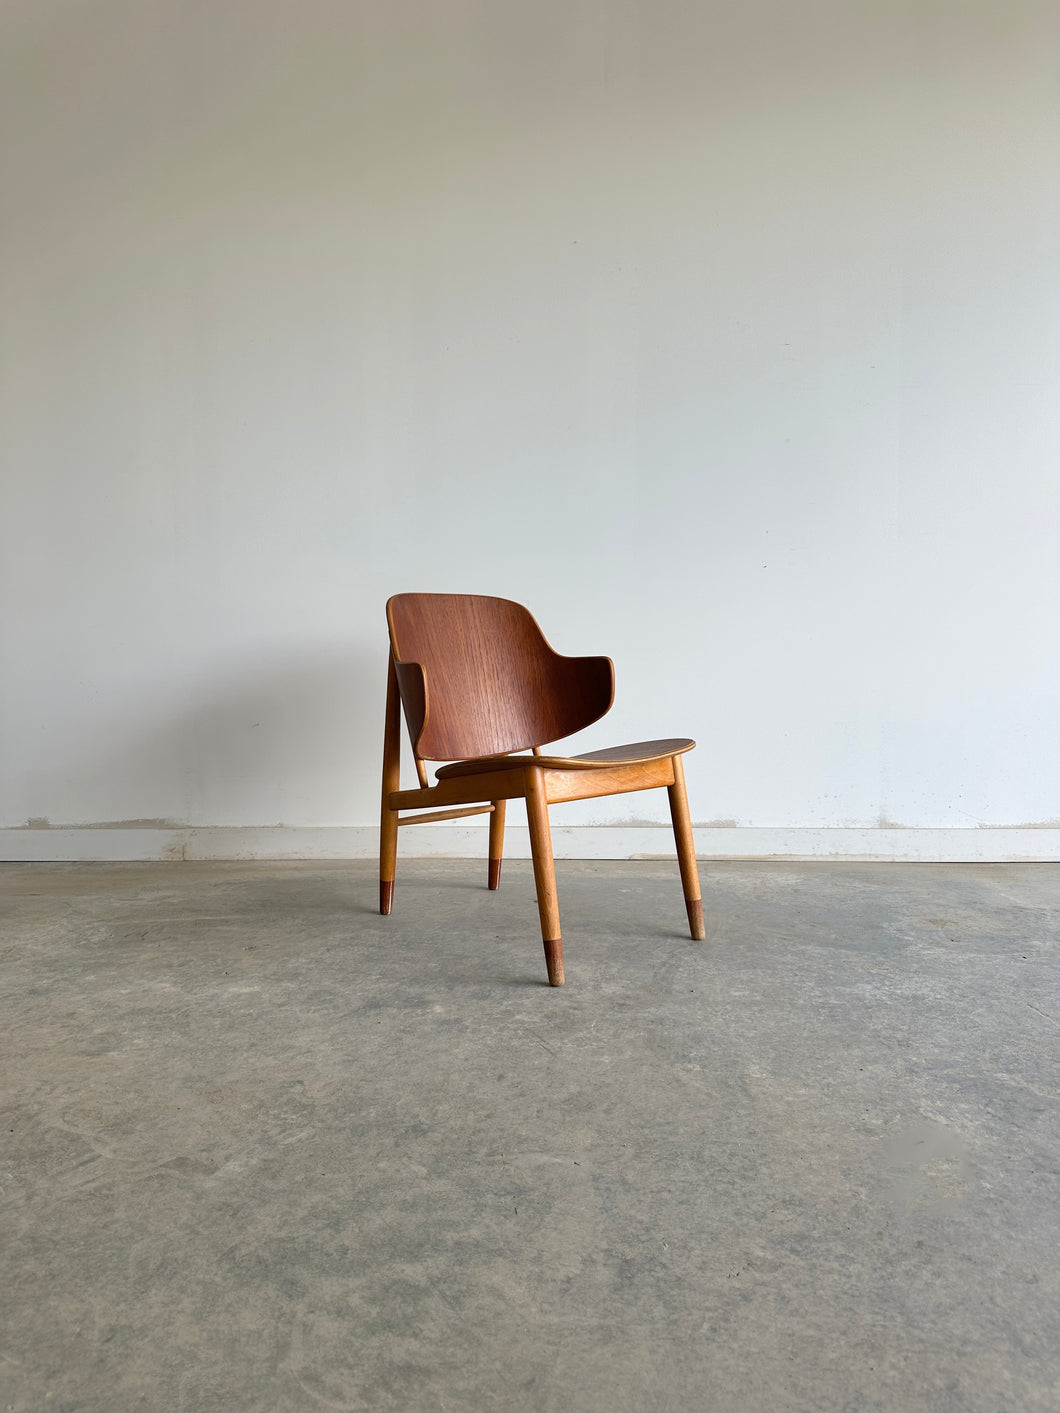 Penguin chair by Ib Kofod-Larsen